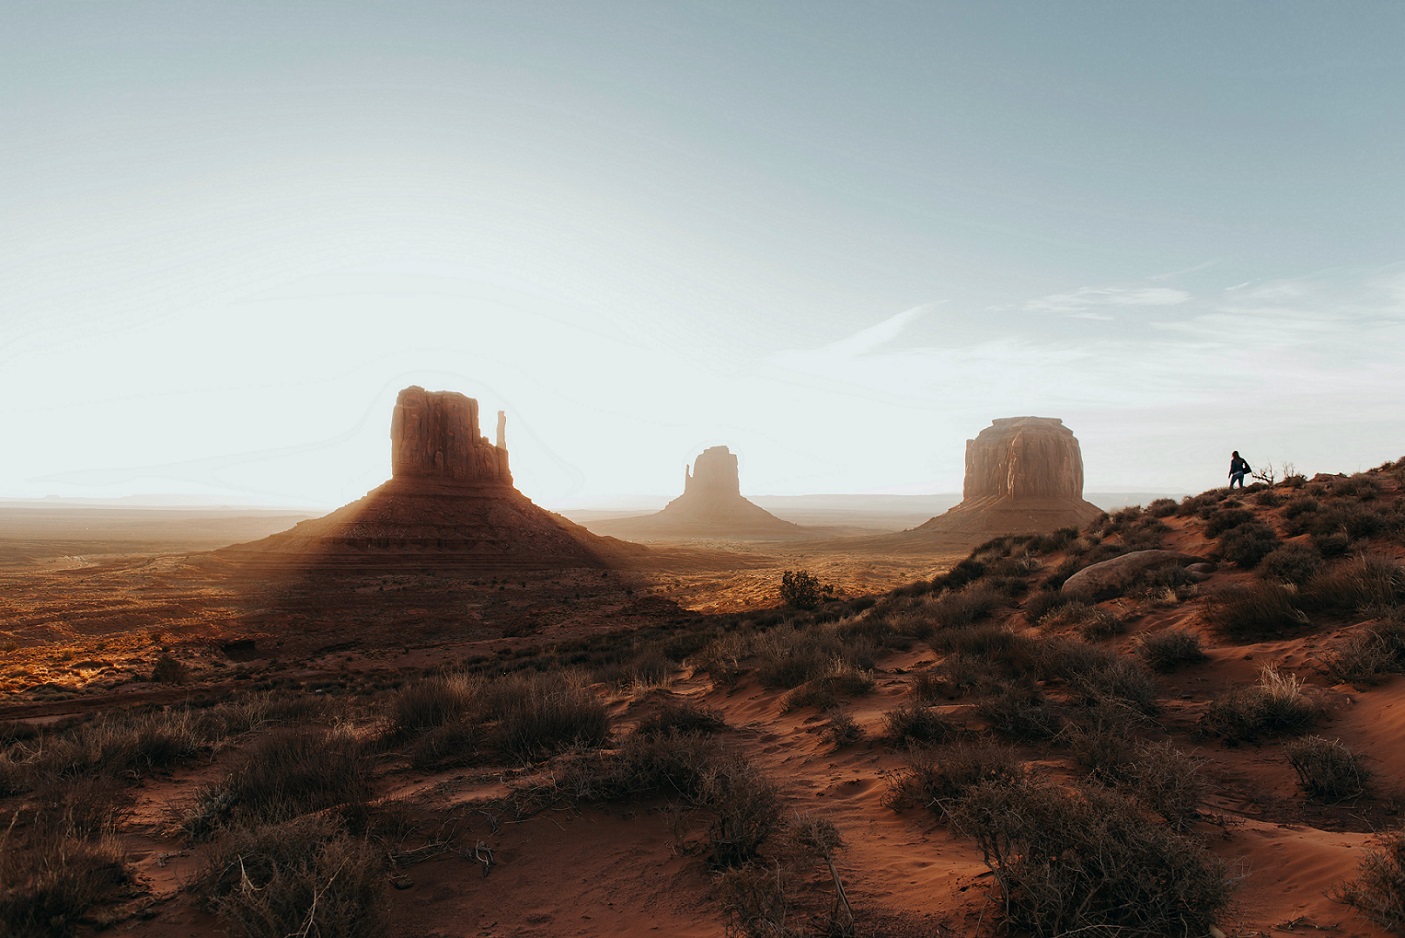 Desert scene with a hiker